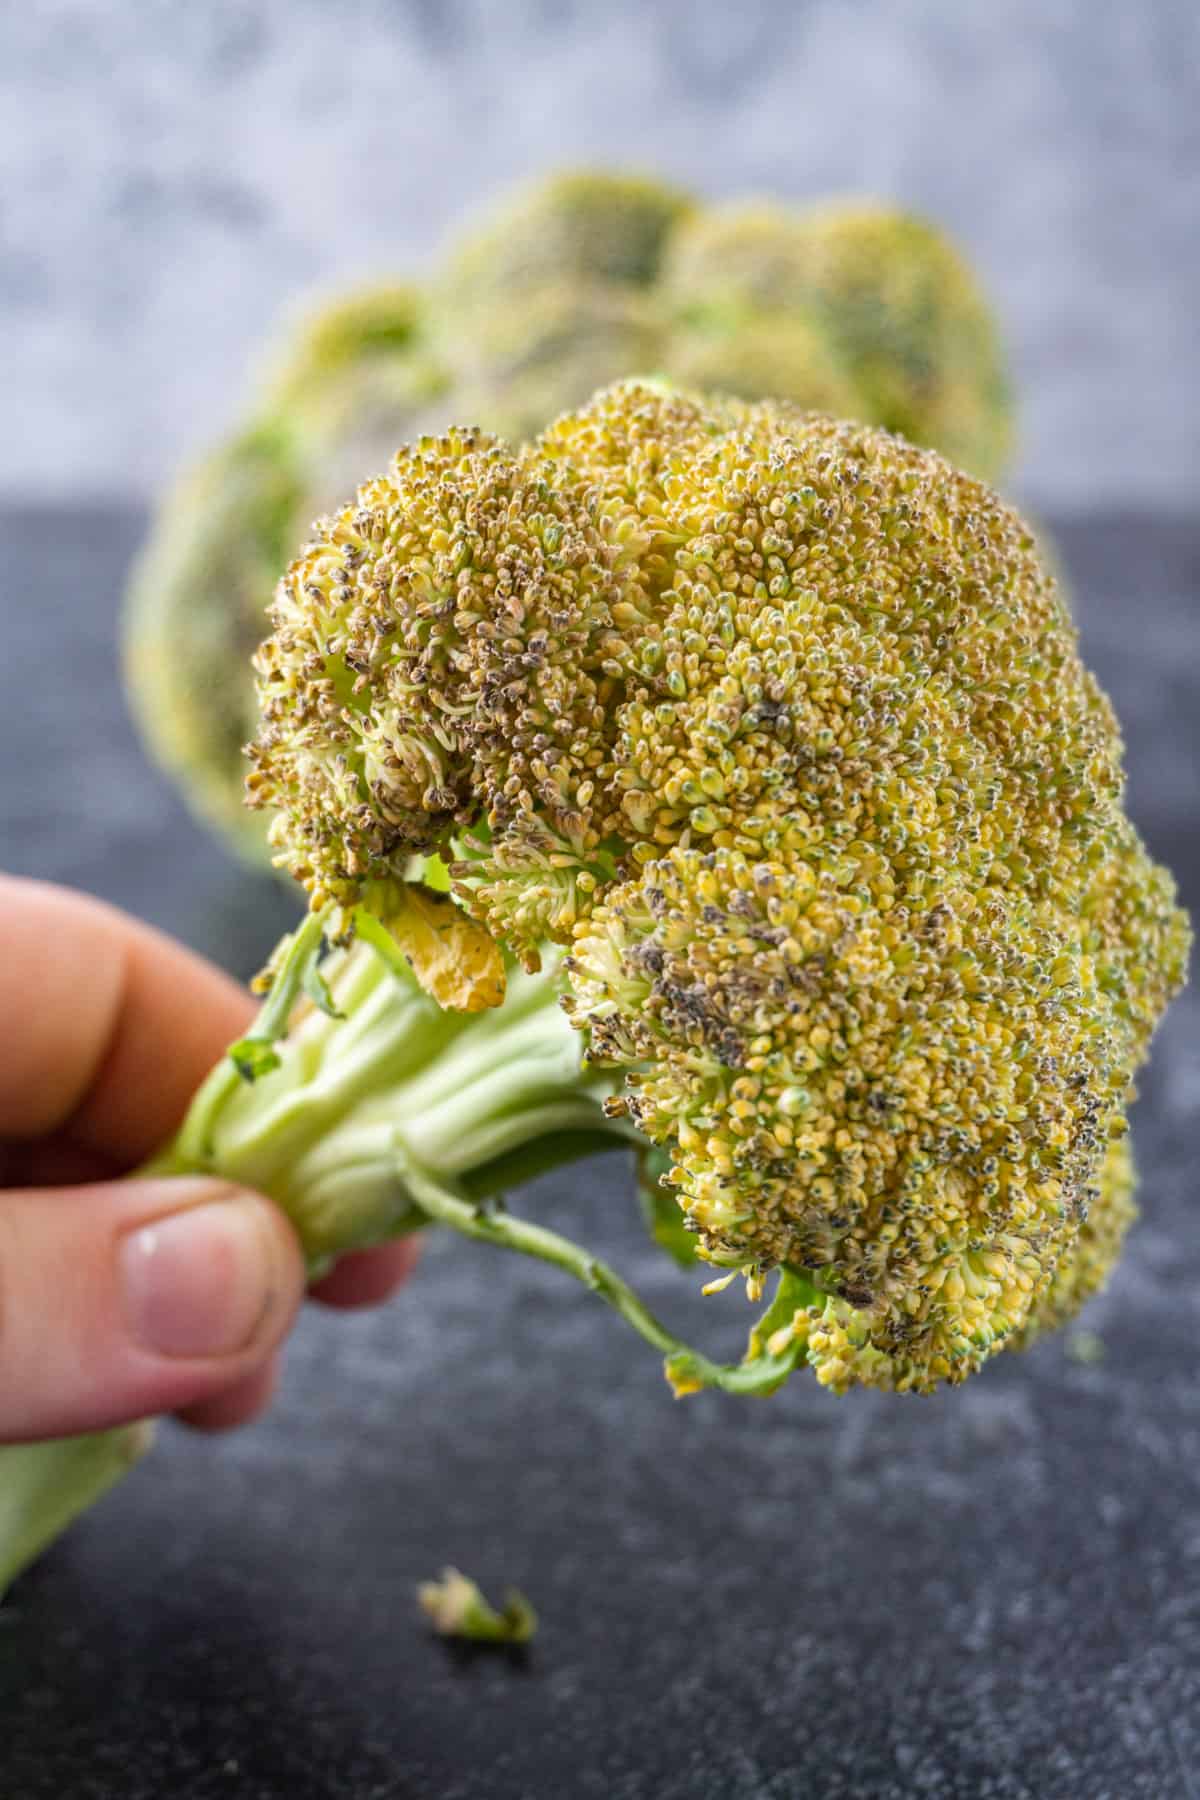 yellowed bad broccoi held in hand